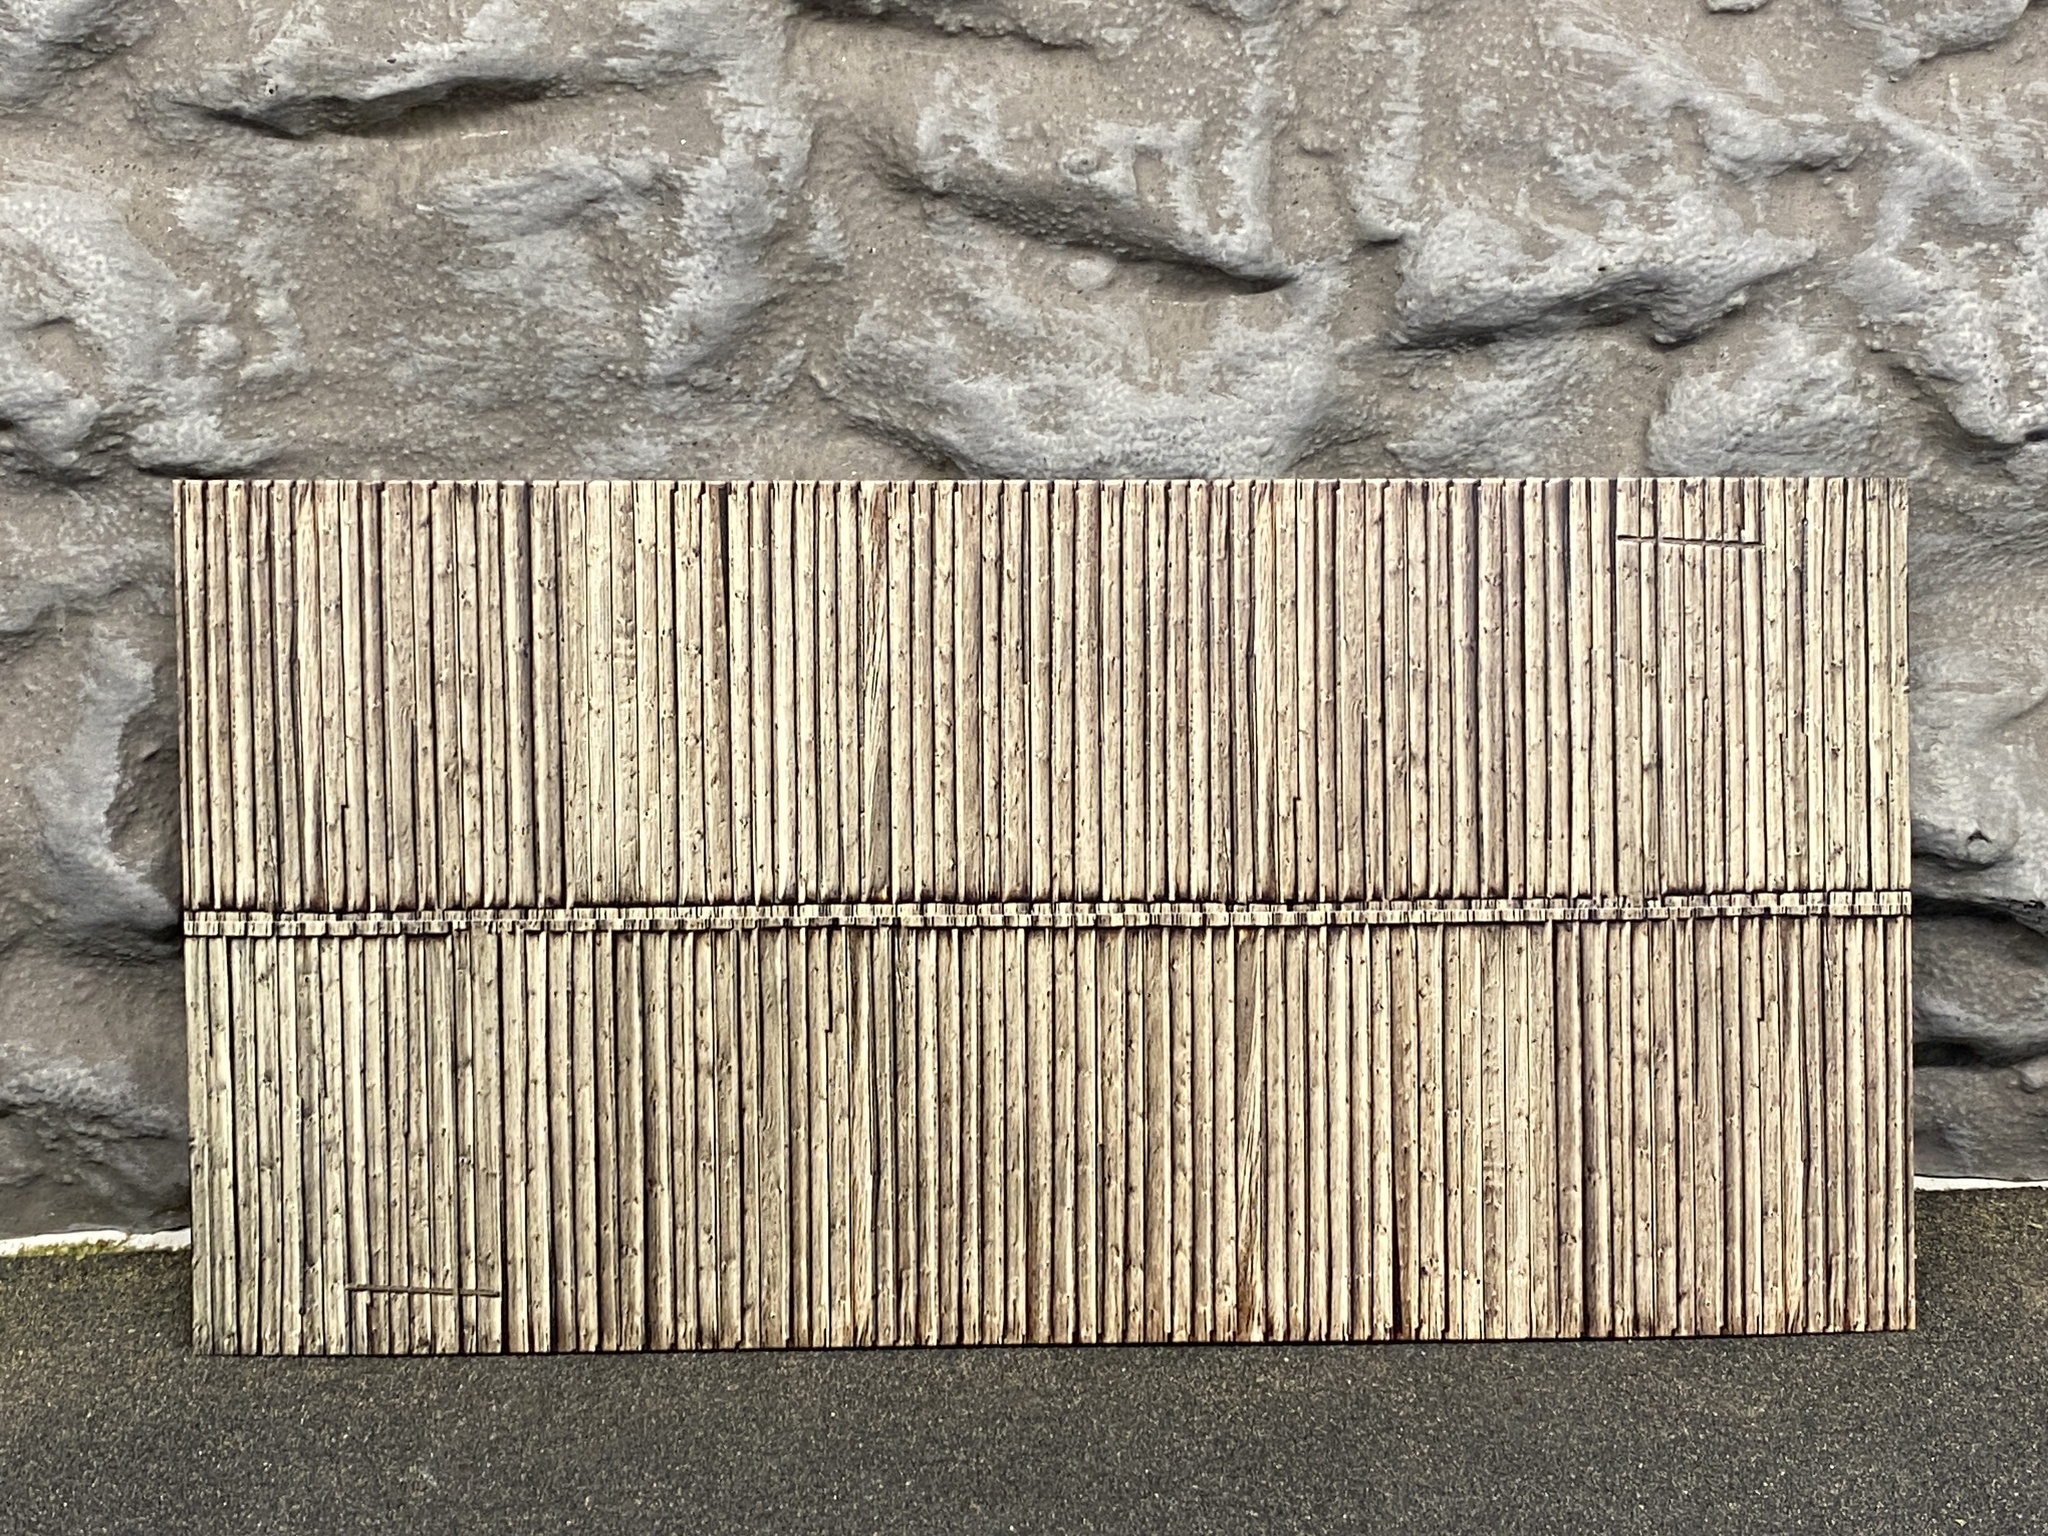 NOCH 56664 Timmervägg/Timber wall - 3D Cardboard Sheet 25x12,5 cm f H0 & TT